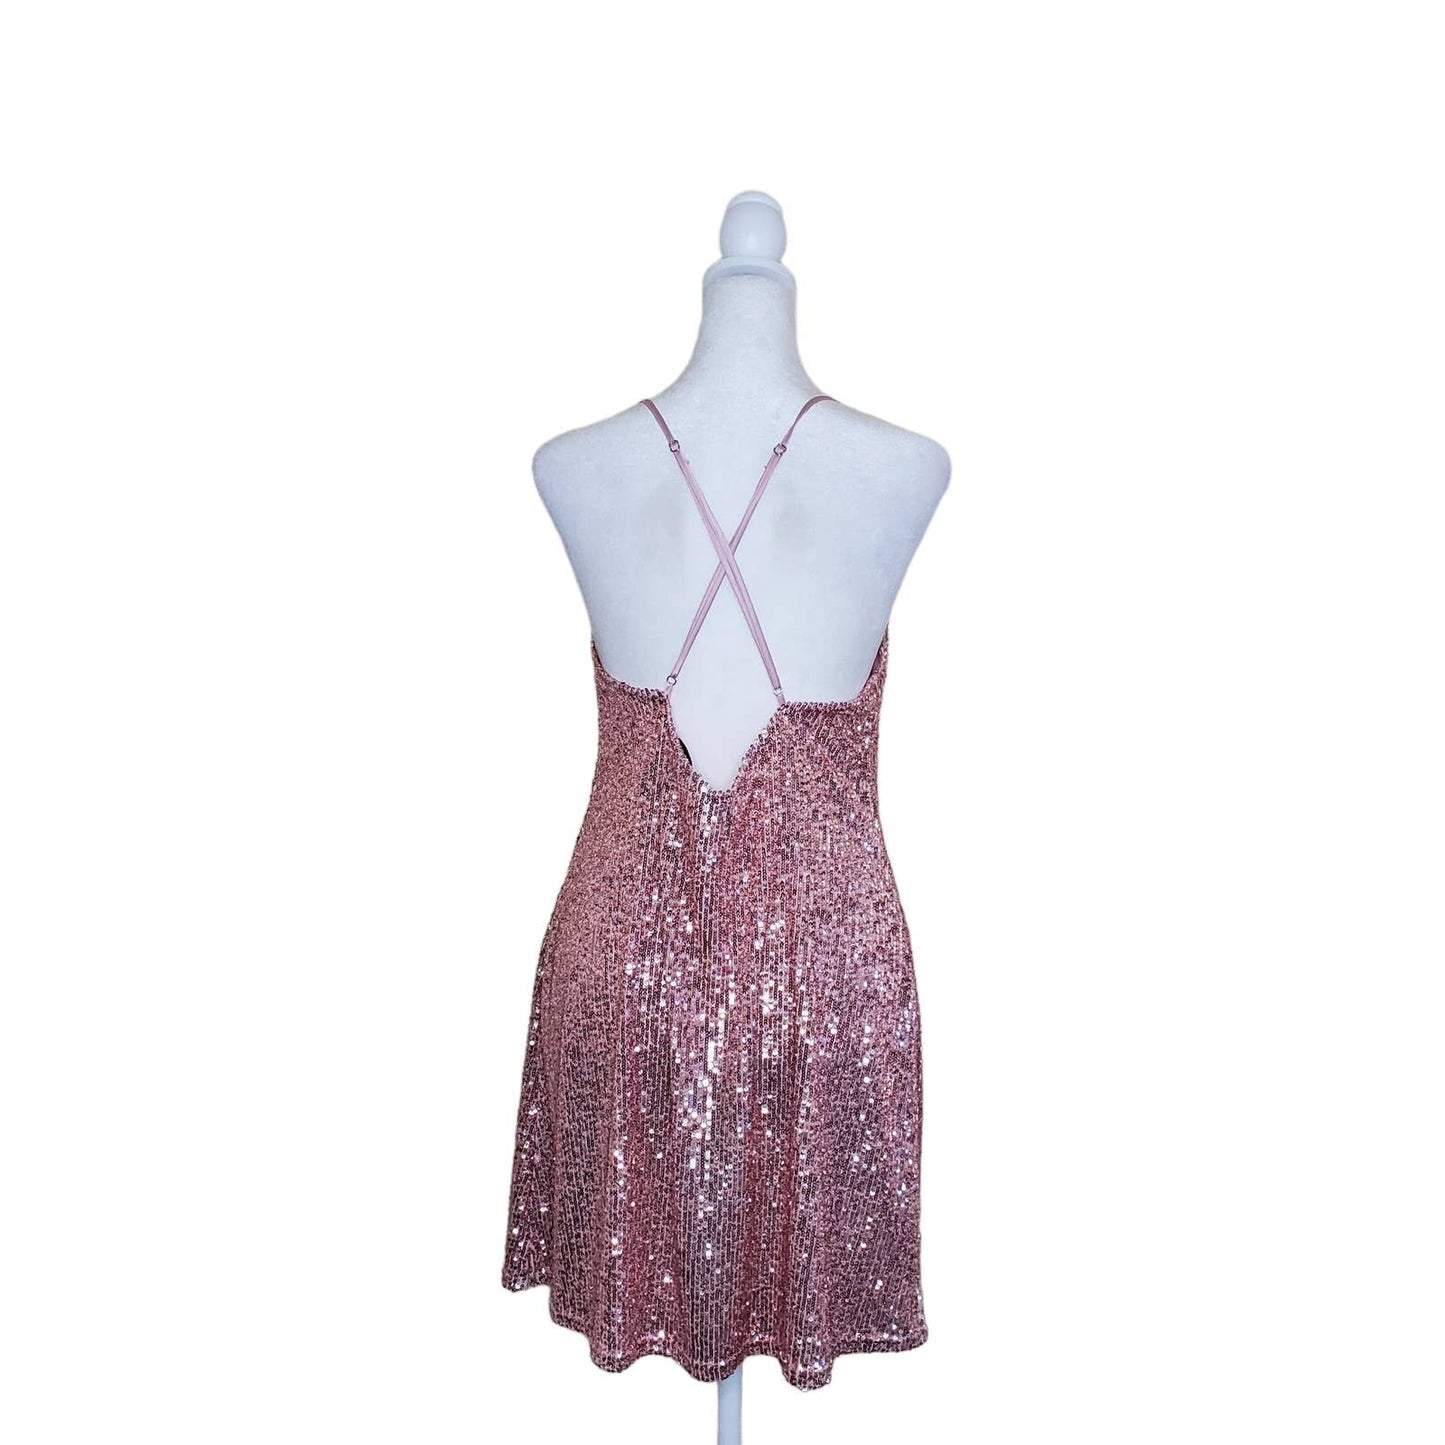 NEW Victoria's Secret Pink Sequin Barbiecore Teddy/Dress, Medium